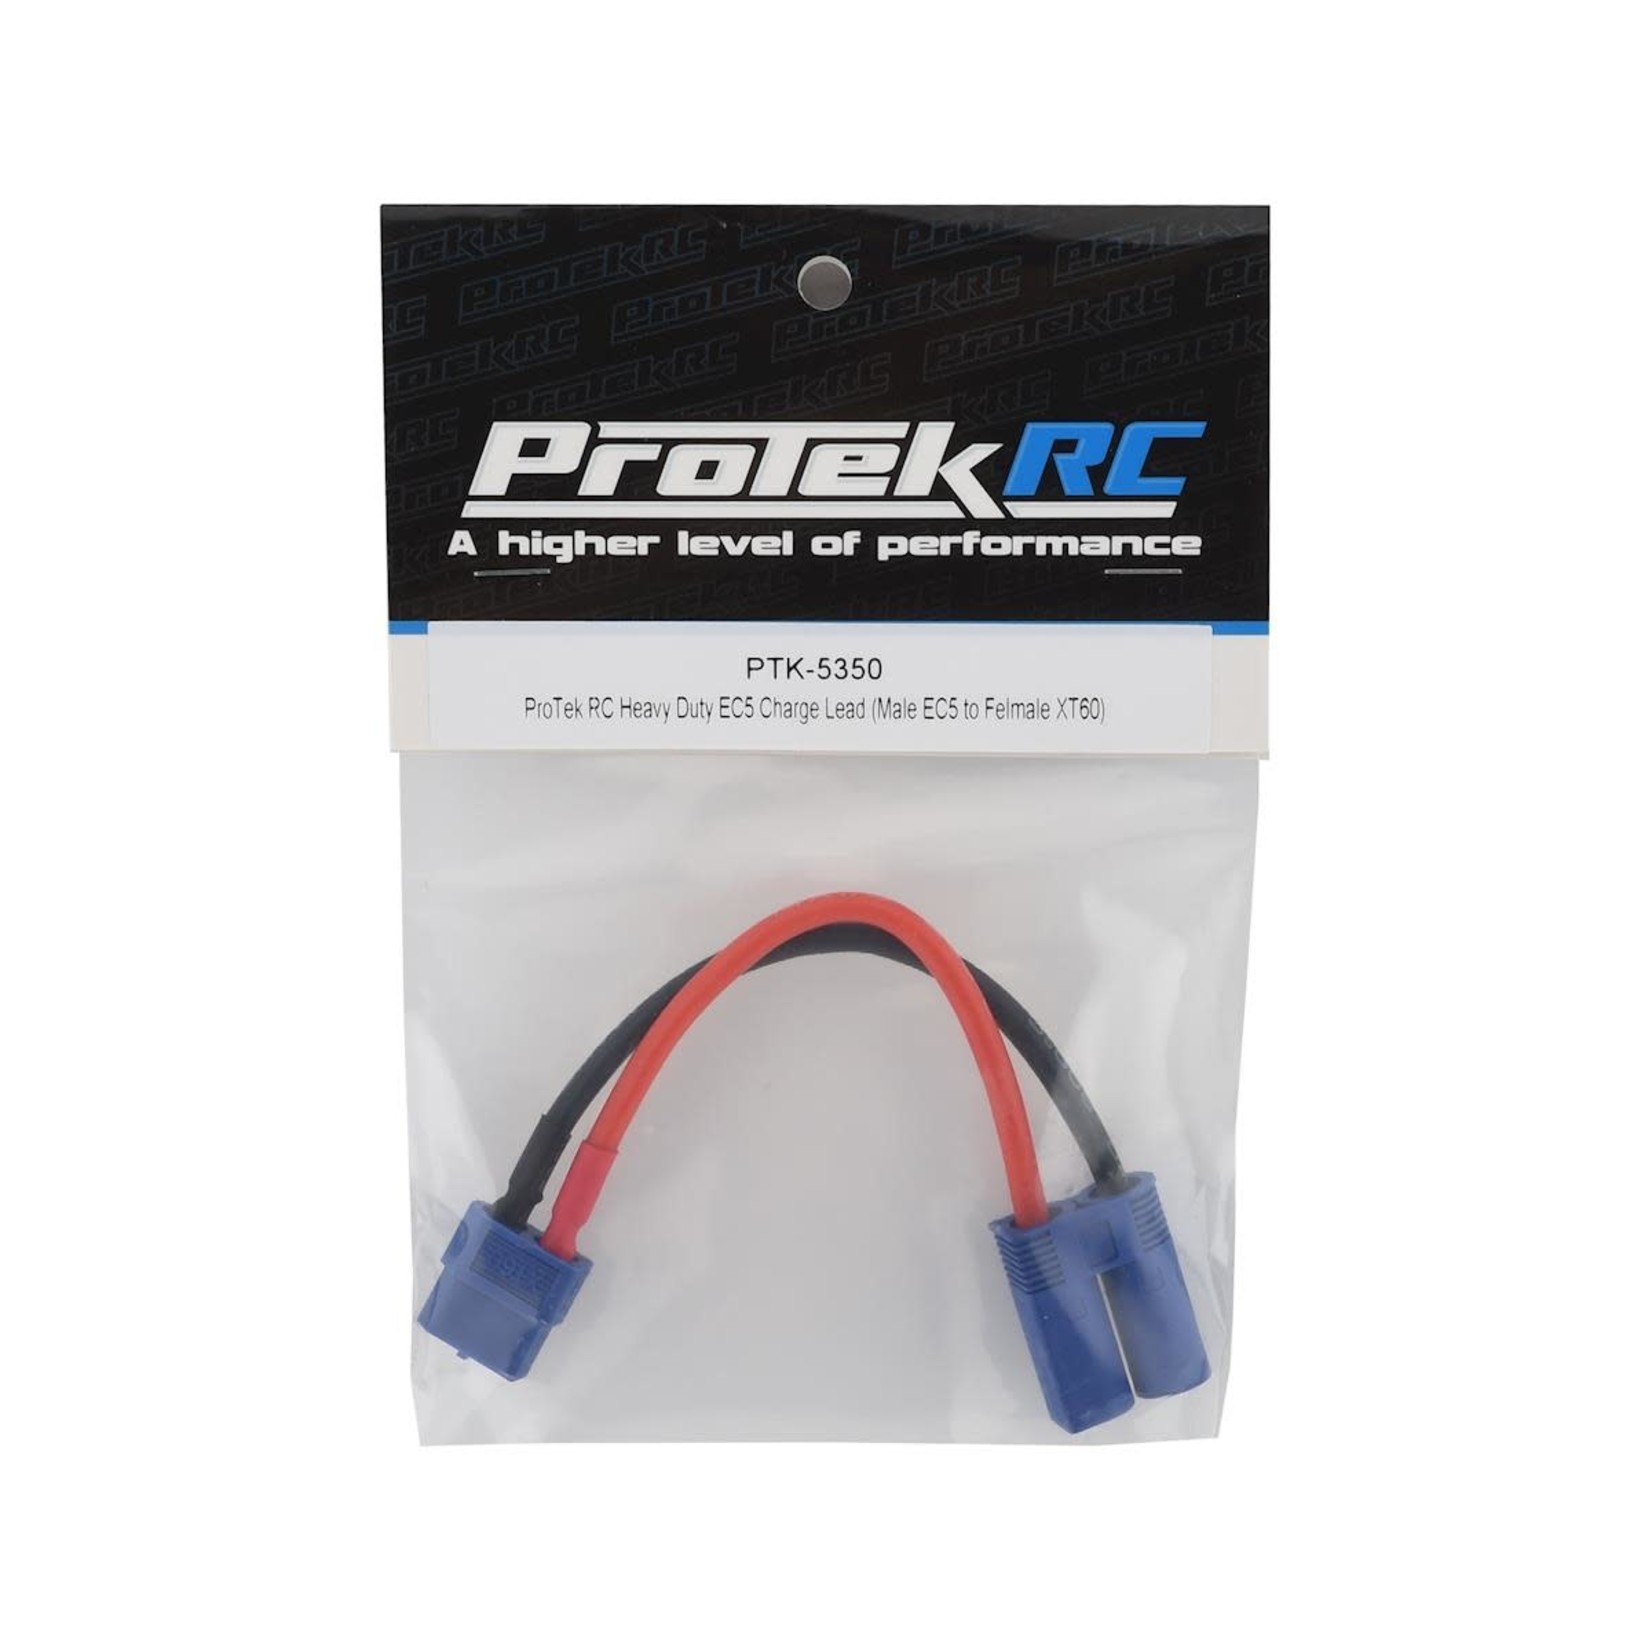 ProTek RC ProTek RC Heavy Duty EC5 Charge Lead Adapter (Male EC5 to Female XT60) #PTK-5350